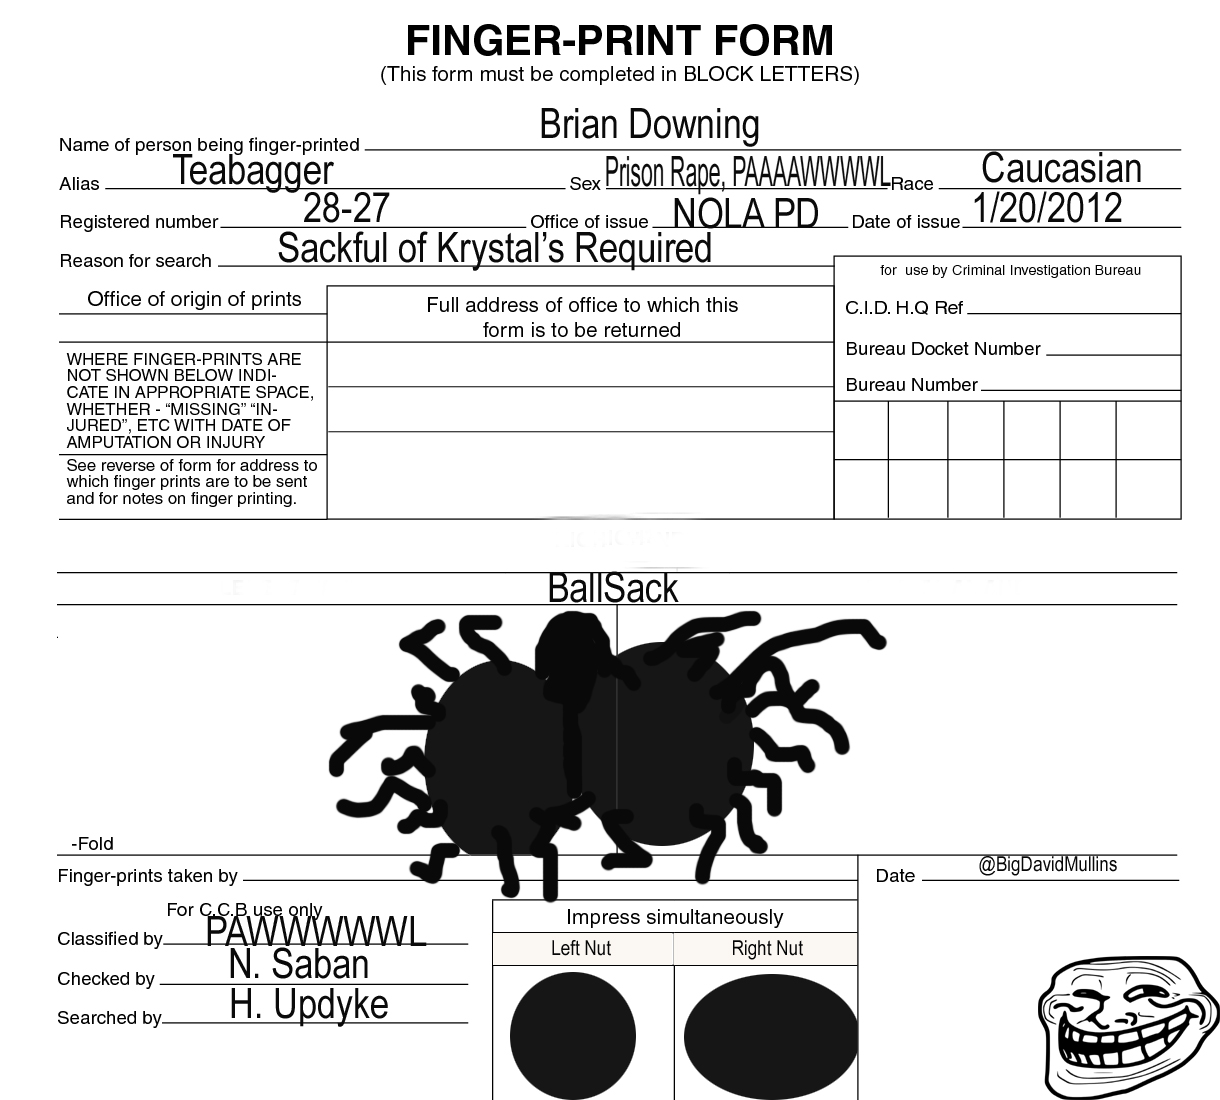 fingerprint-form-copy.jpg